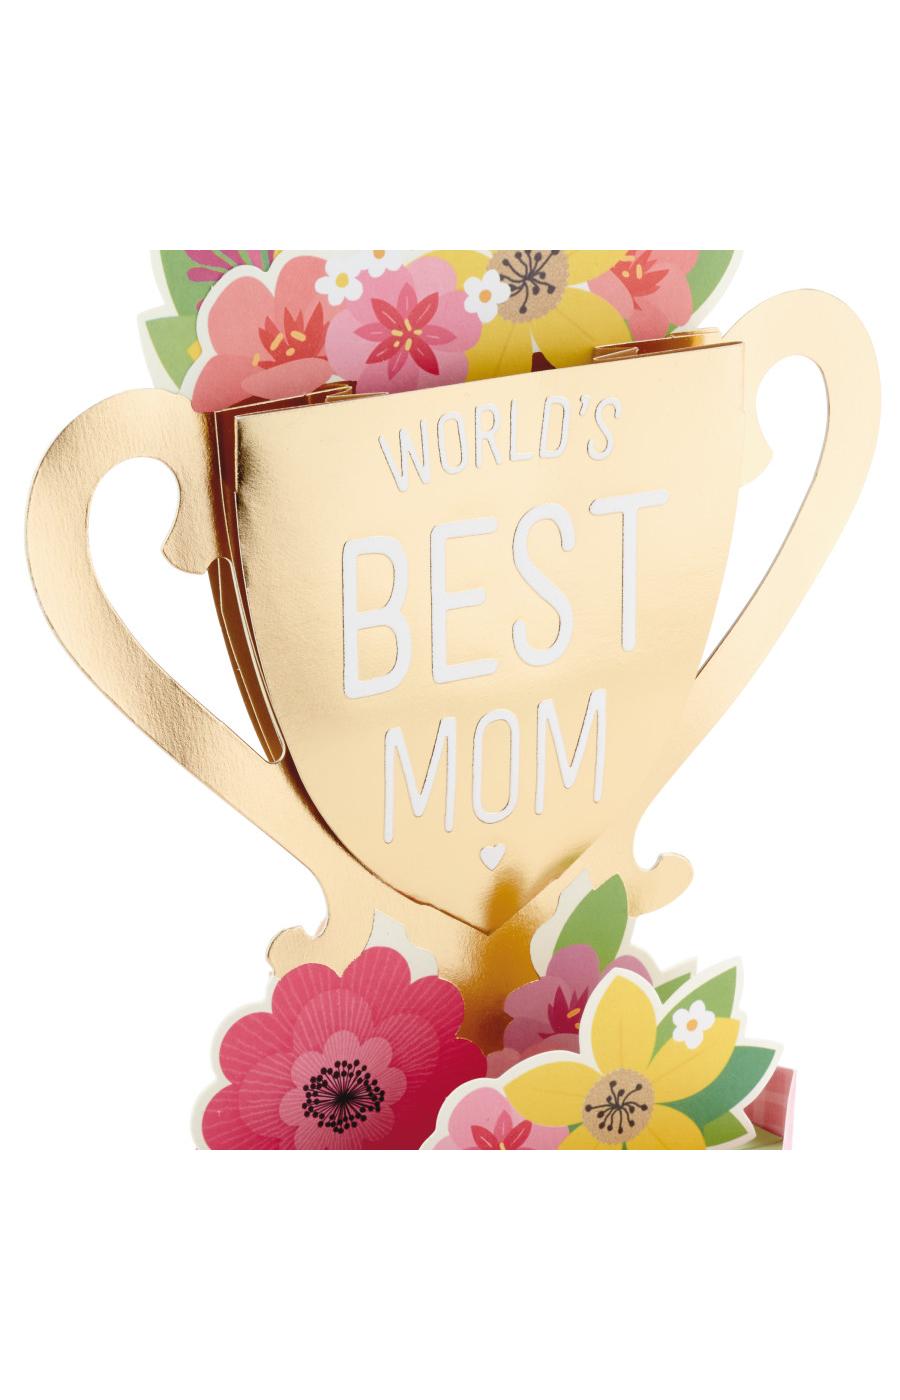 Mother's Day  Hallmark Corporate Information